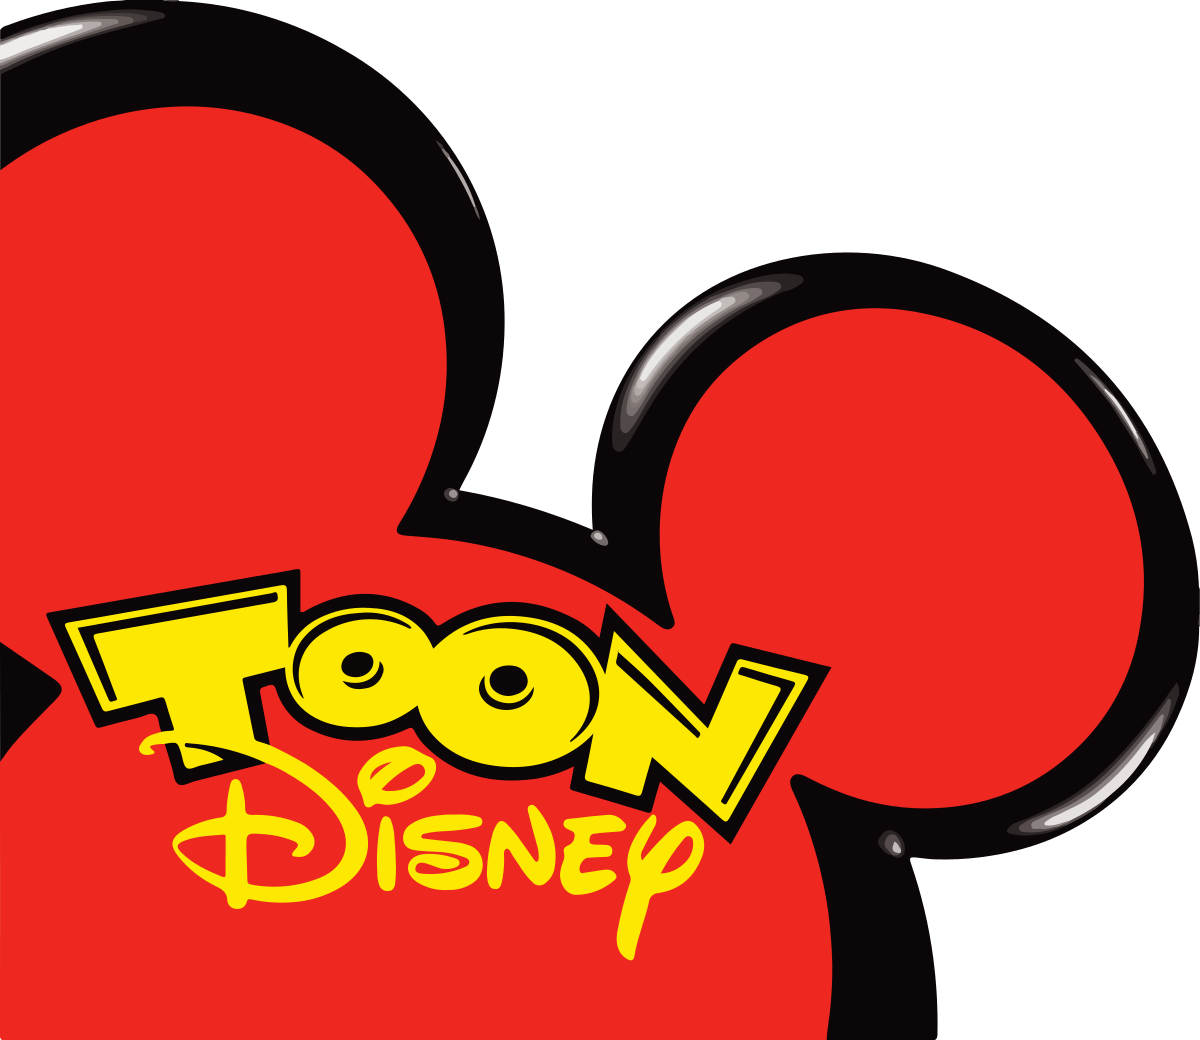 Playhouse Disney Channel Original Logo - Toon Disney